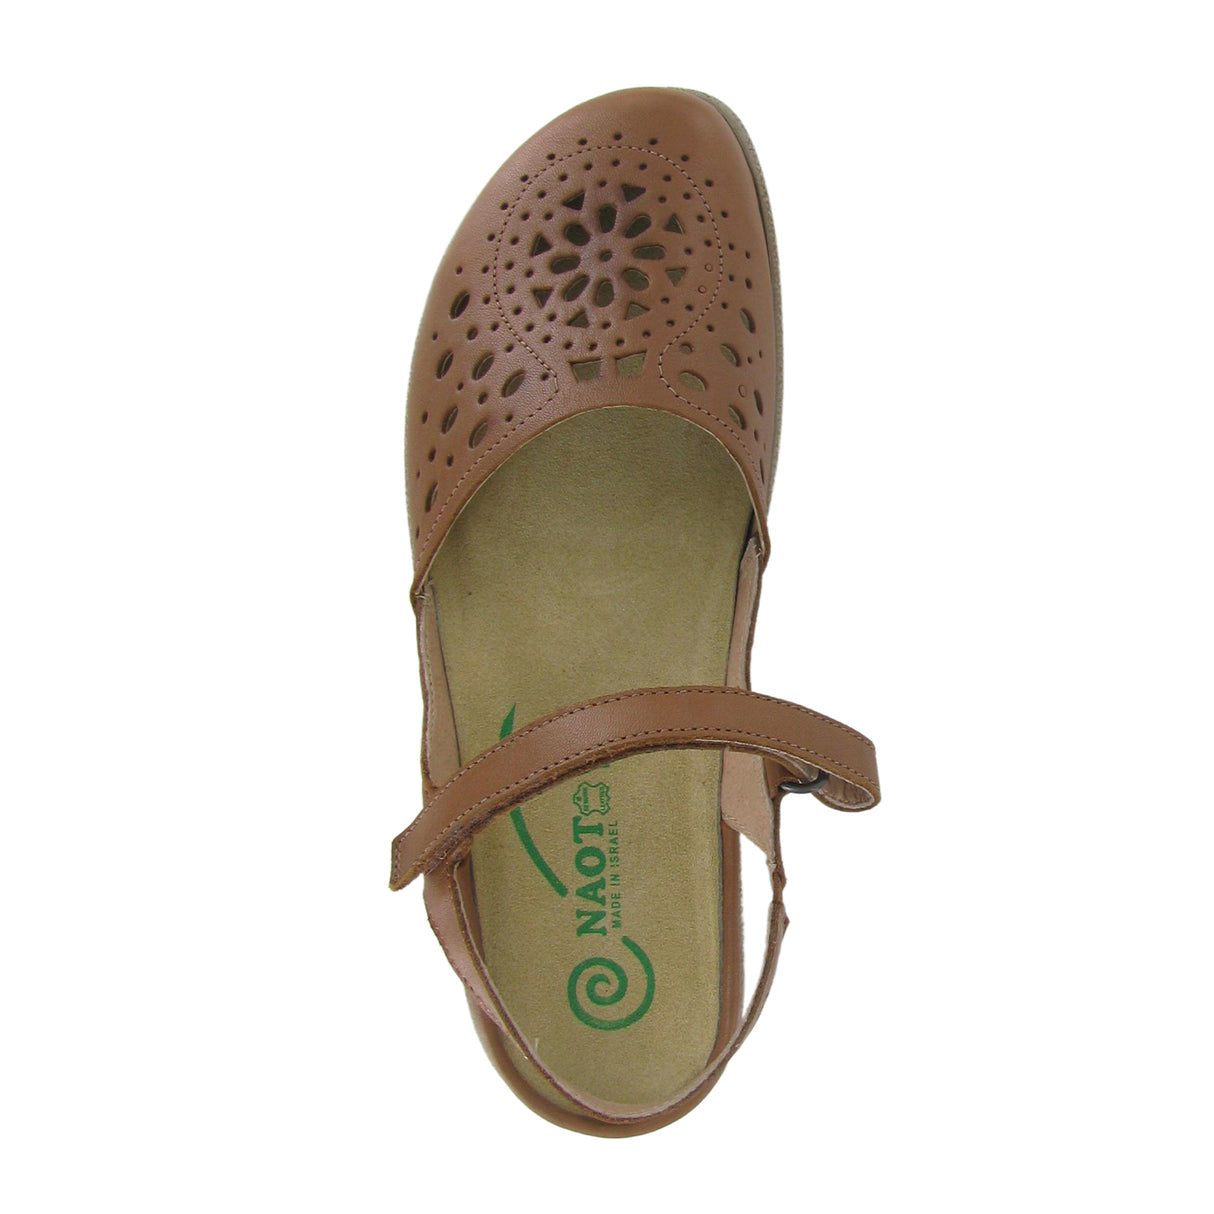 Naot Arataki Backstrap Sandal (Women) - Caramel Leather Sandals - Backstrap - The Heel Shoe Fitters